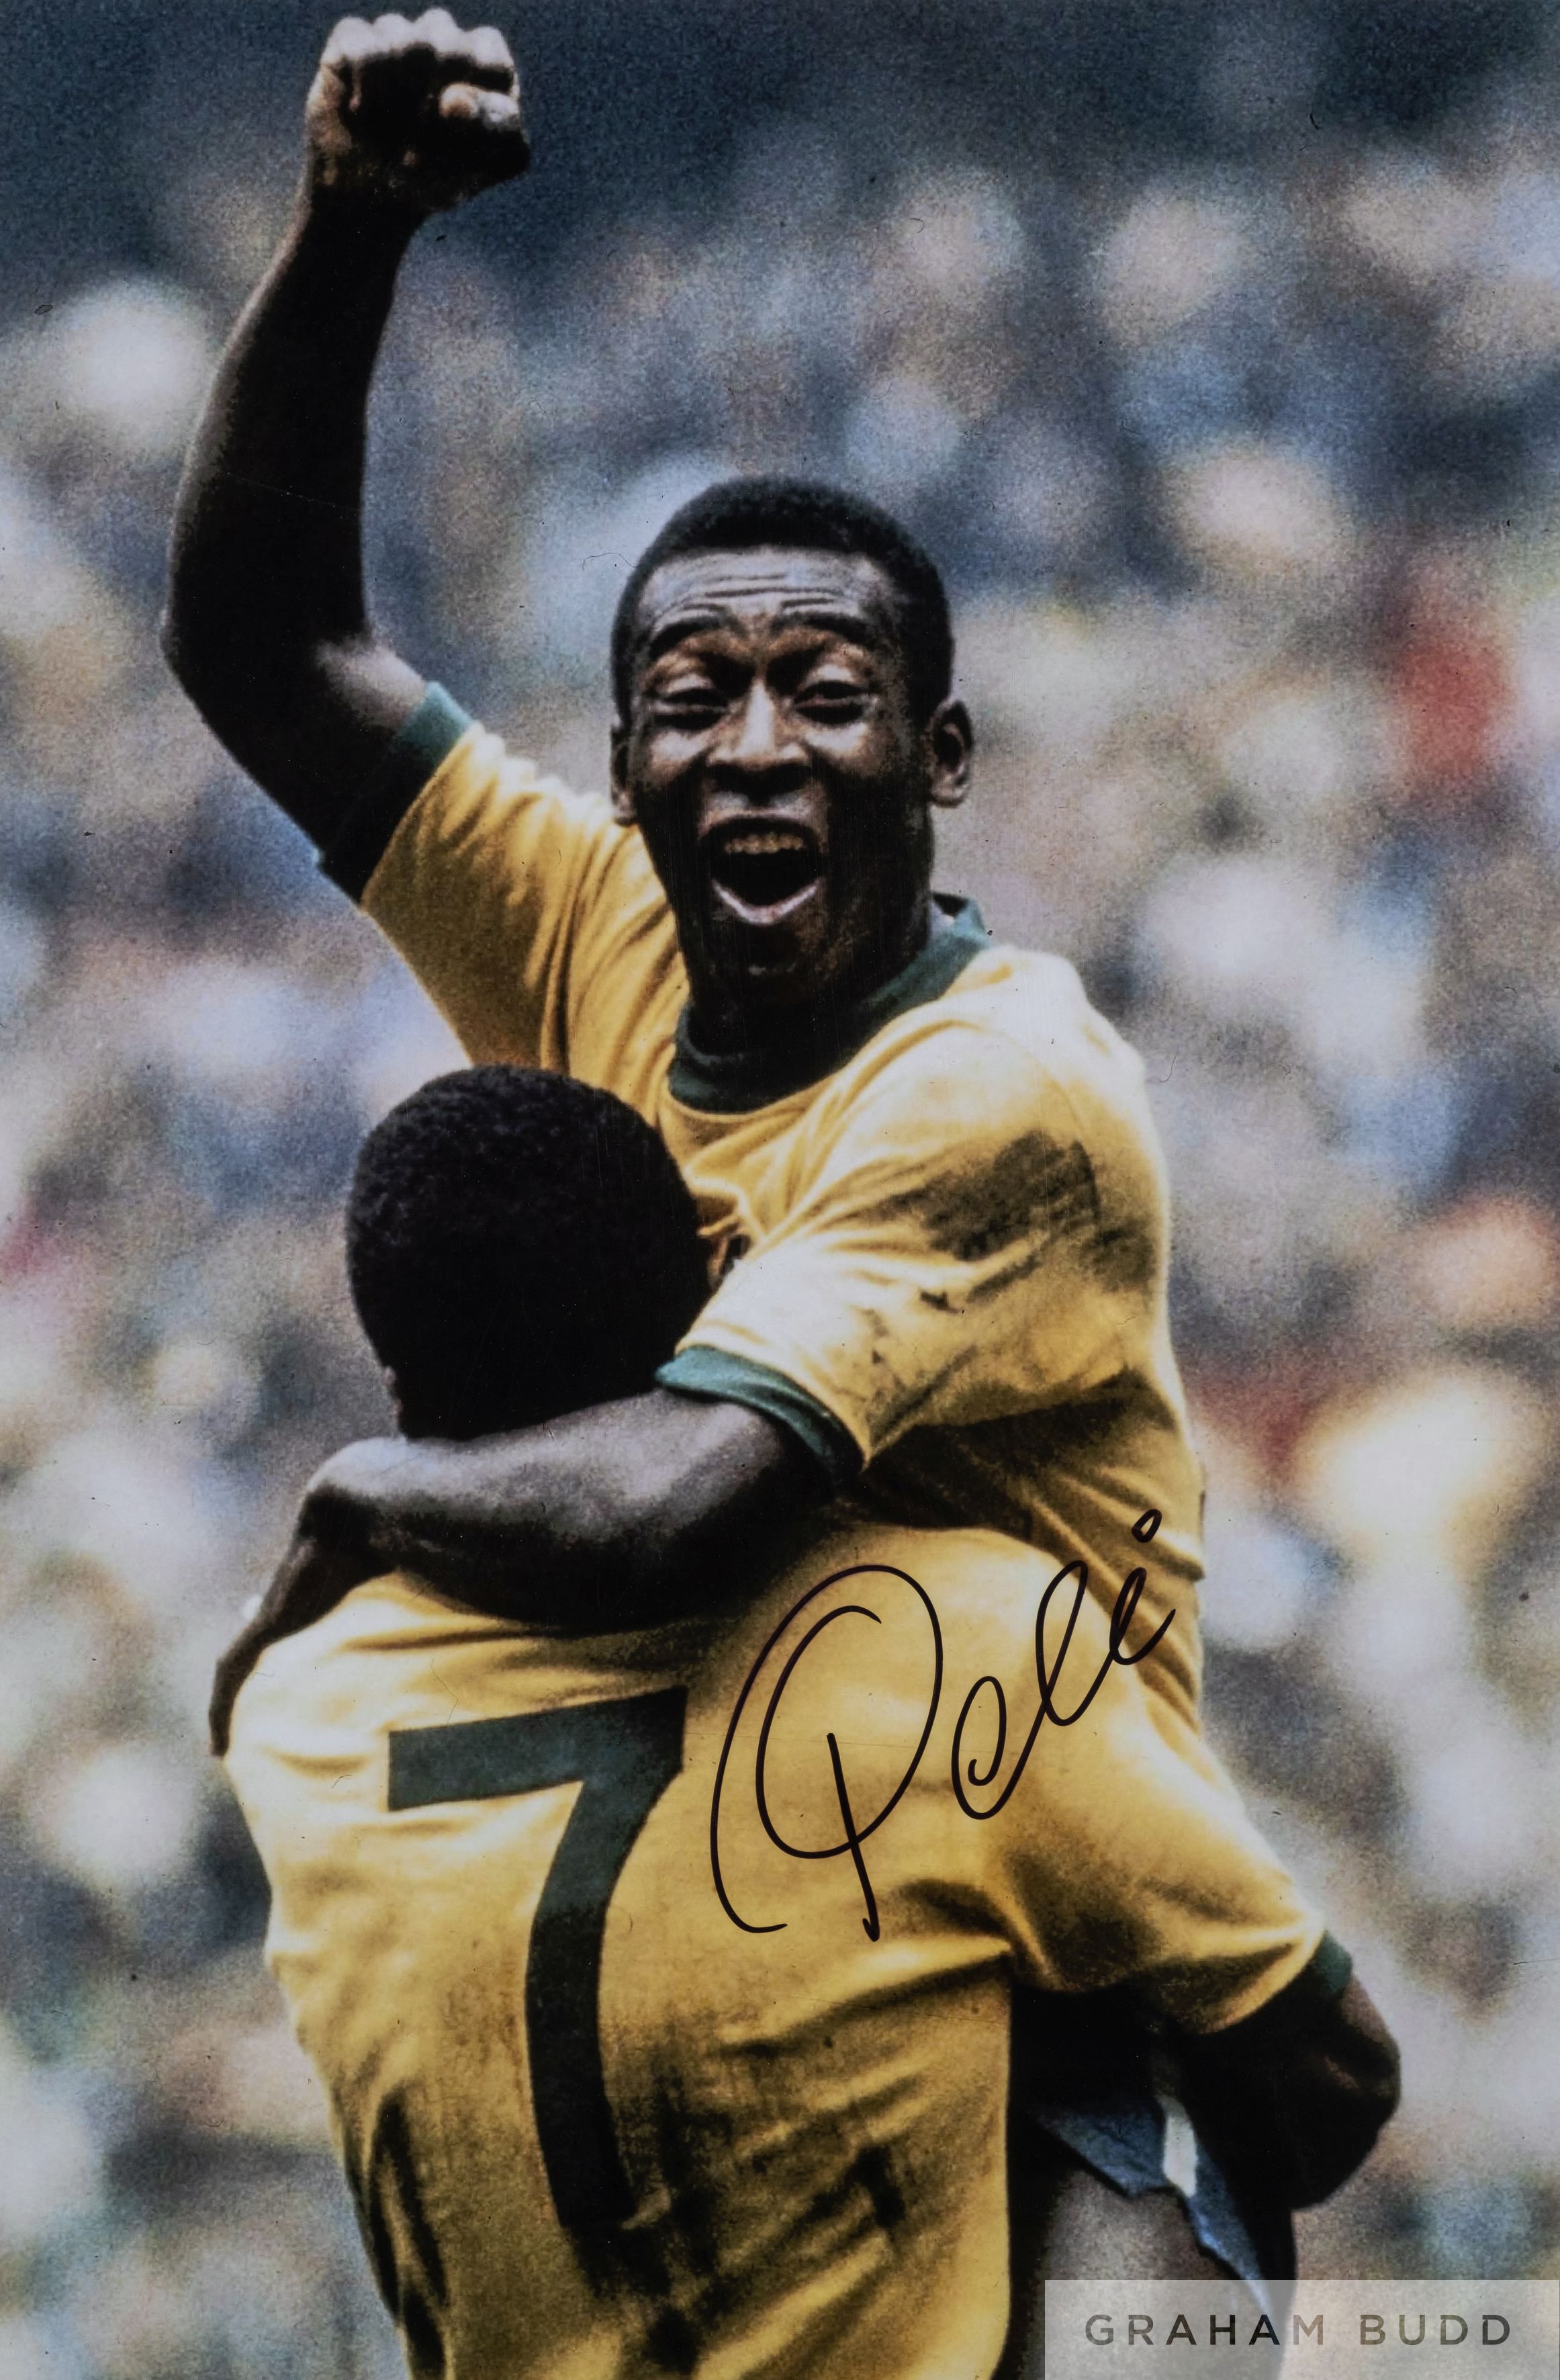 A large colour portrait photograph of Pele celebrating his legendary "Goal of the century"